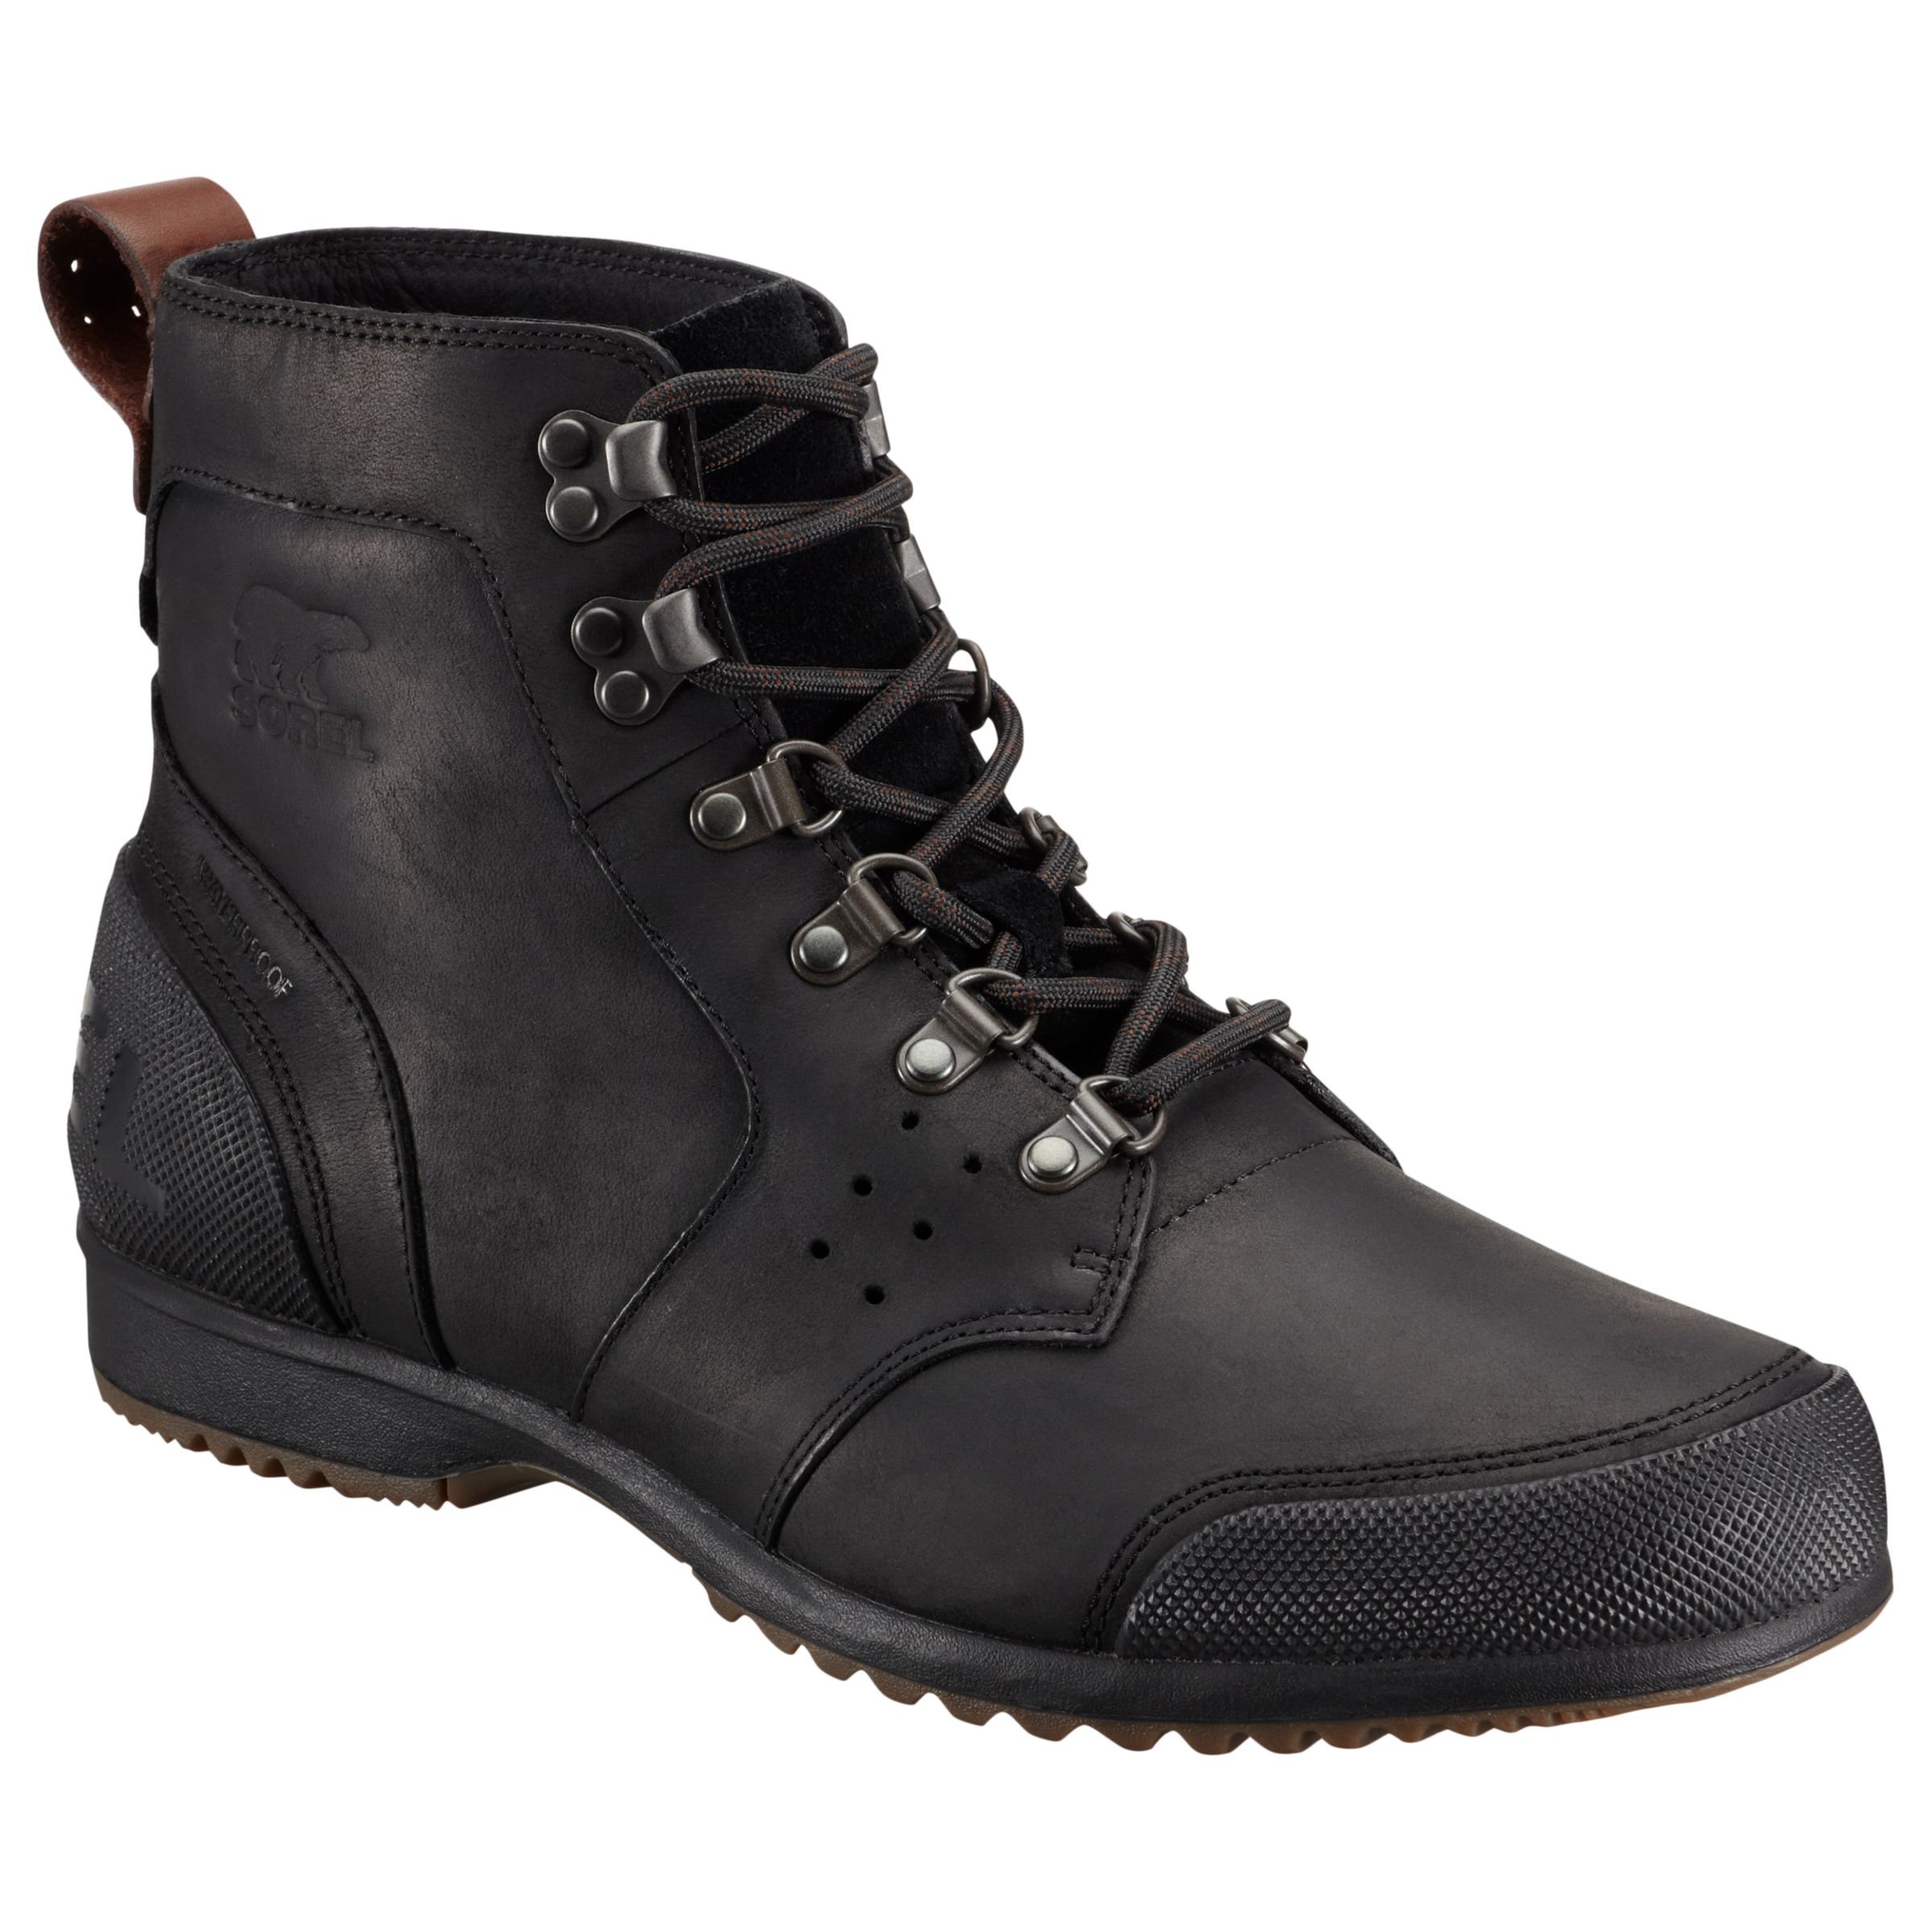 Sorel Ankeny Leather Men's Hiking Boots